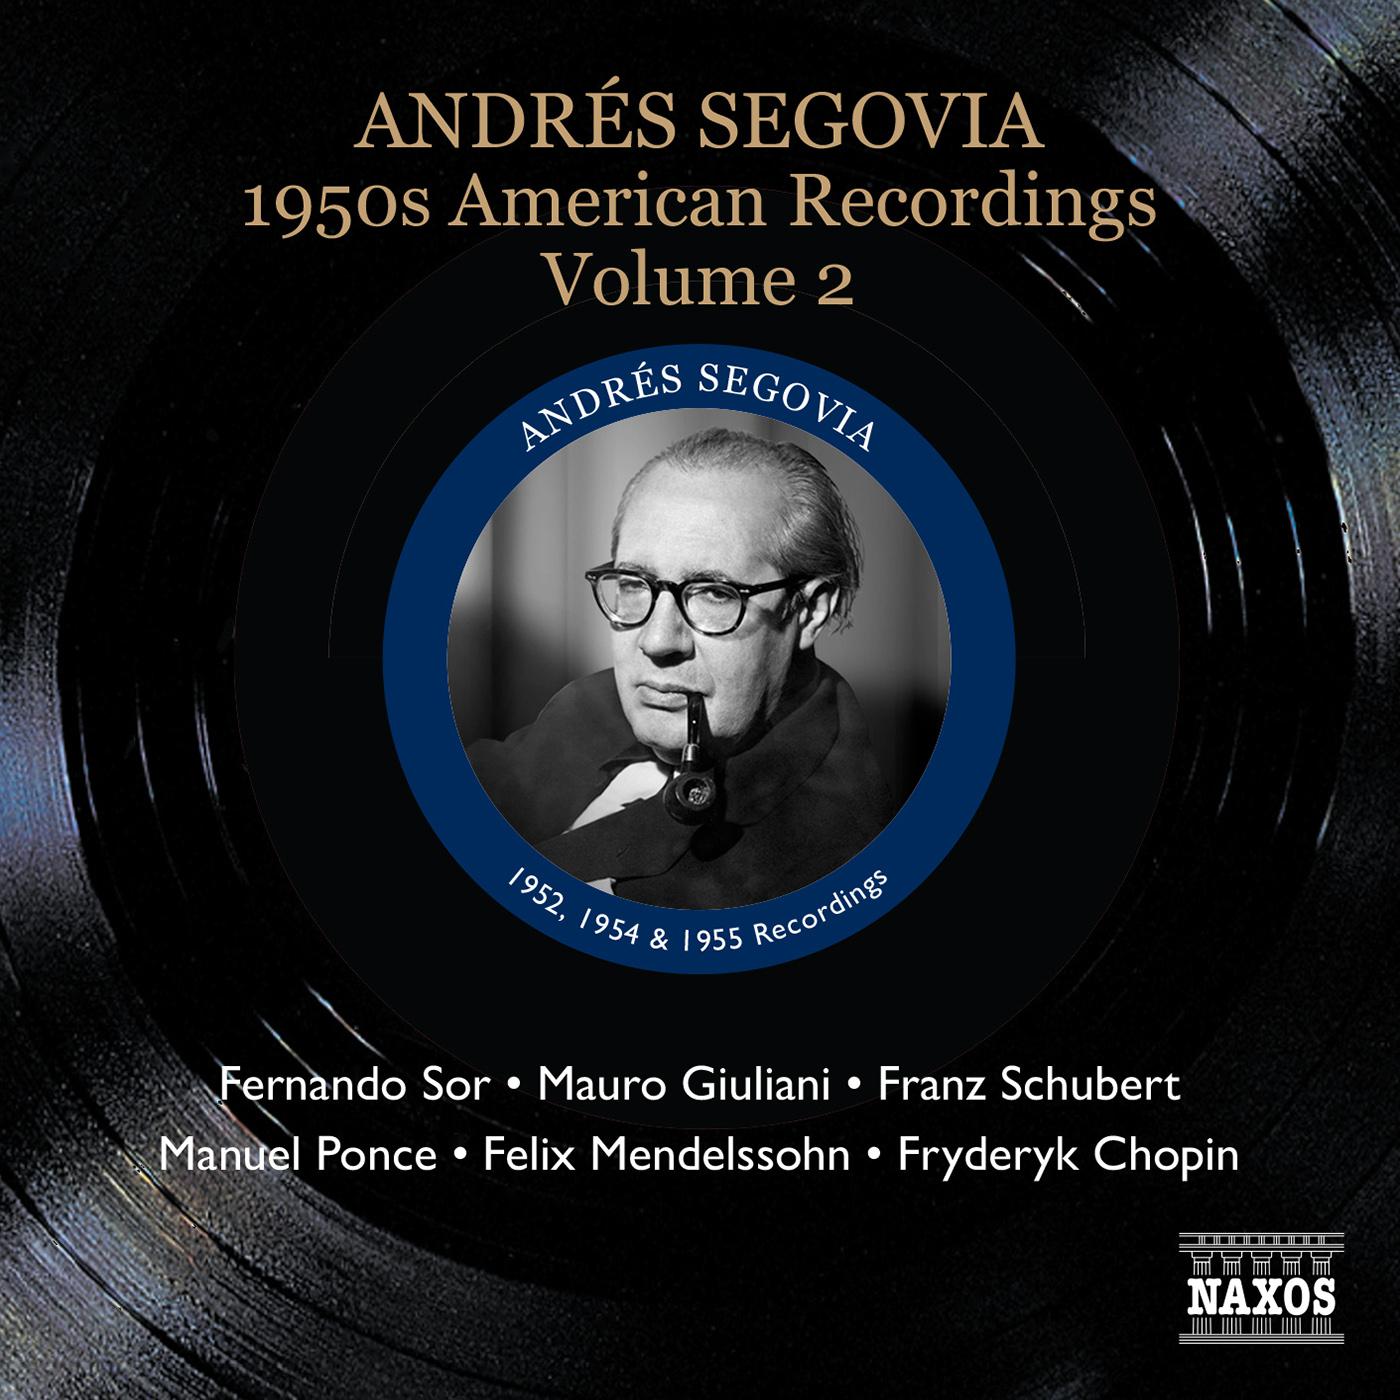 SEGOVIA, Andres: 1950s American Recordings, Vol. 2 (Segovia, Vol. 4)